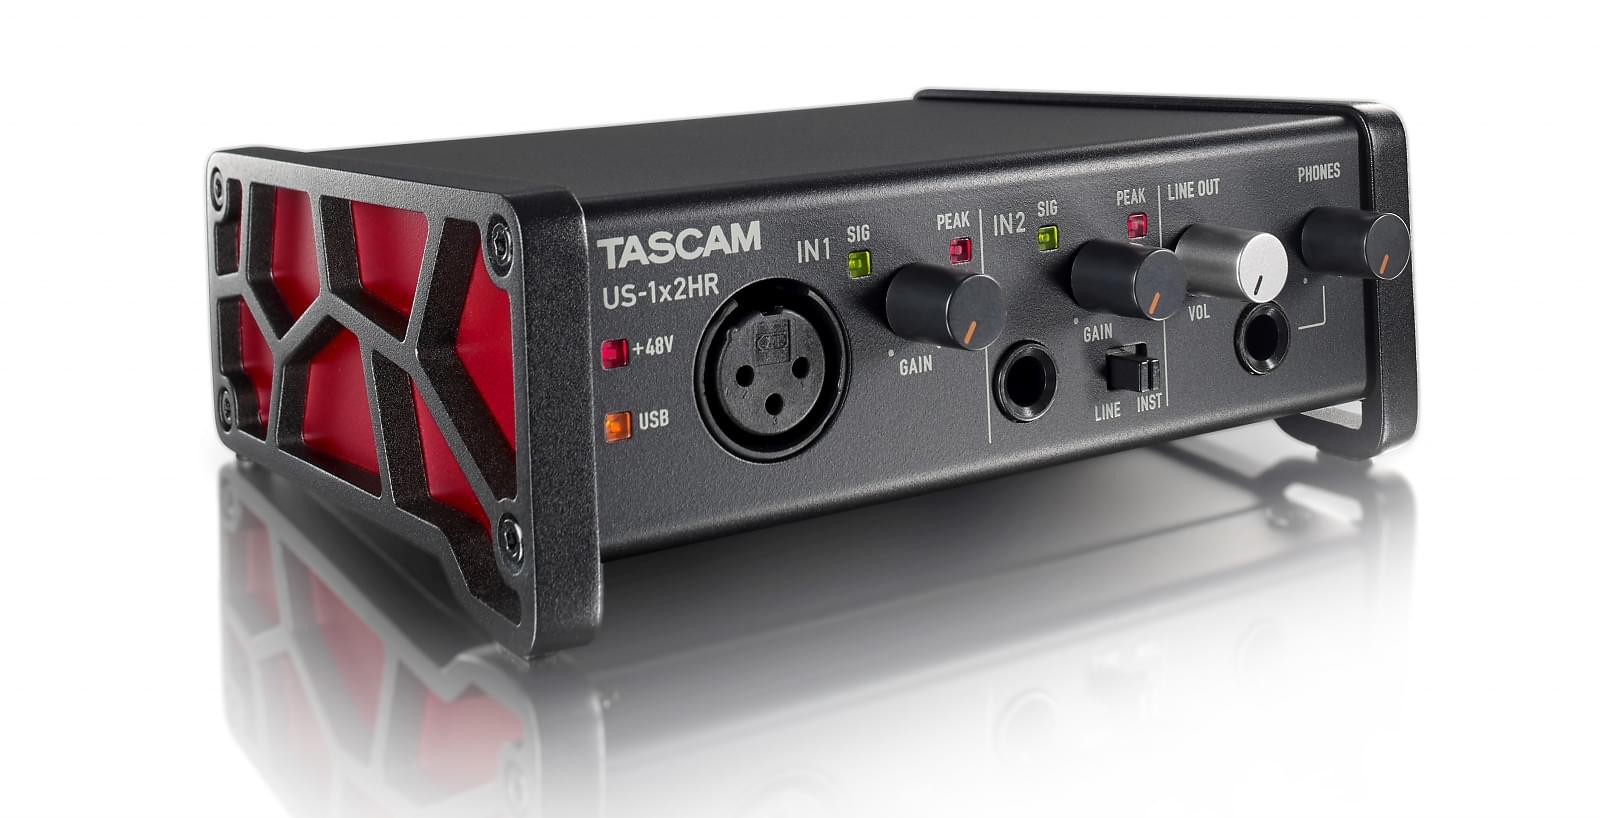 Tascam US-1x2HR | High-Resolution USB Audio Interface (2 in / 1 